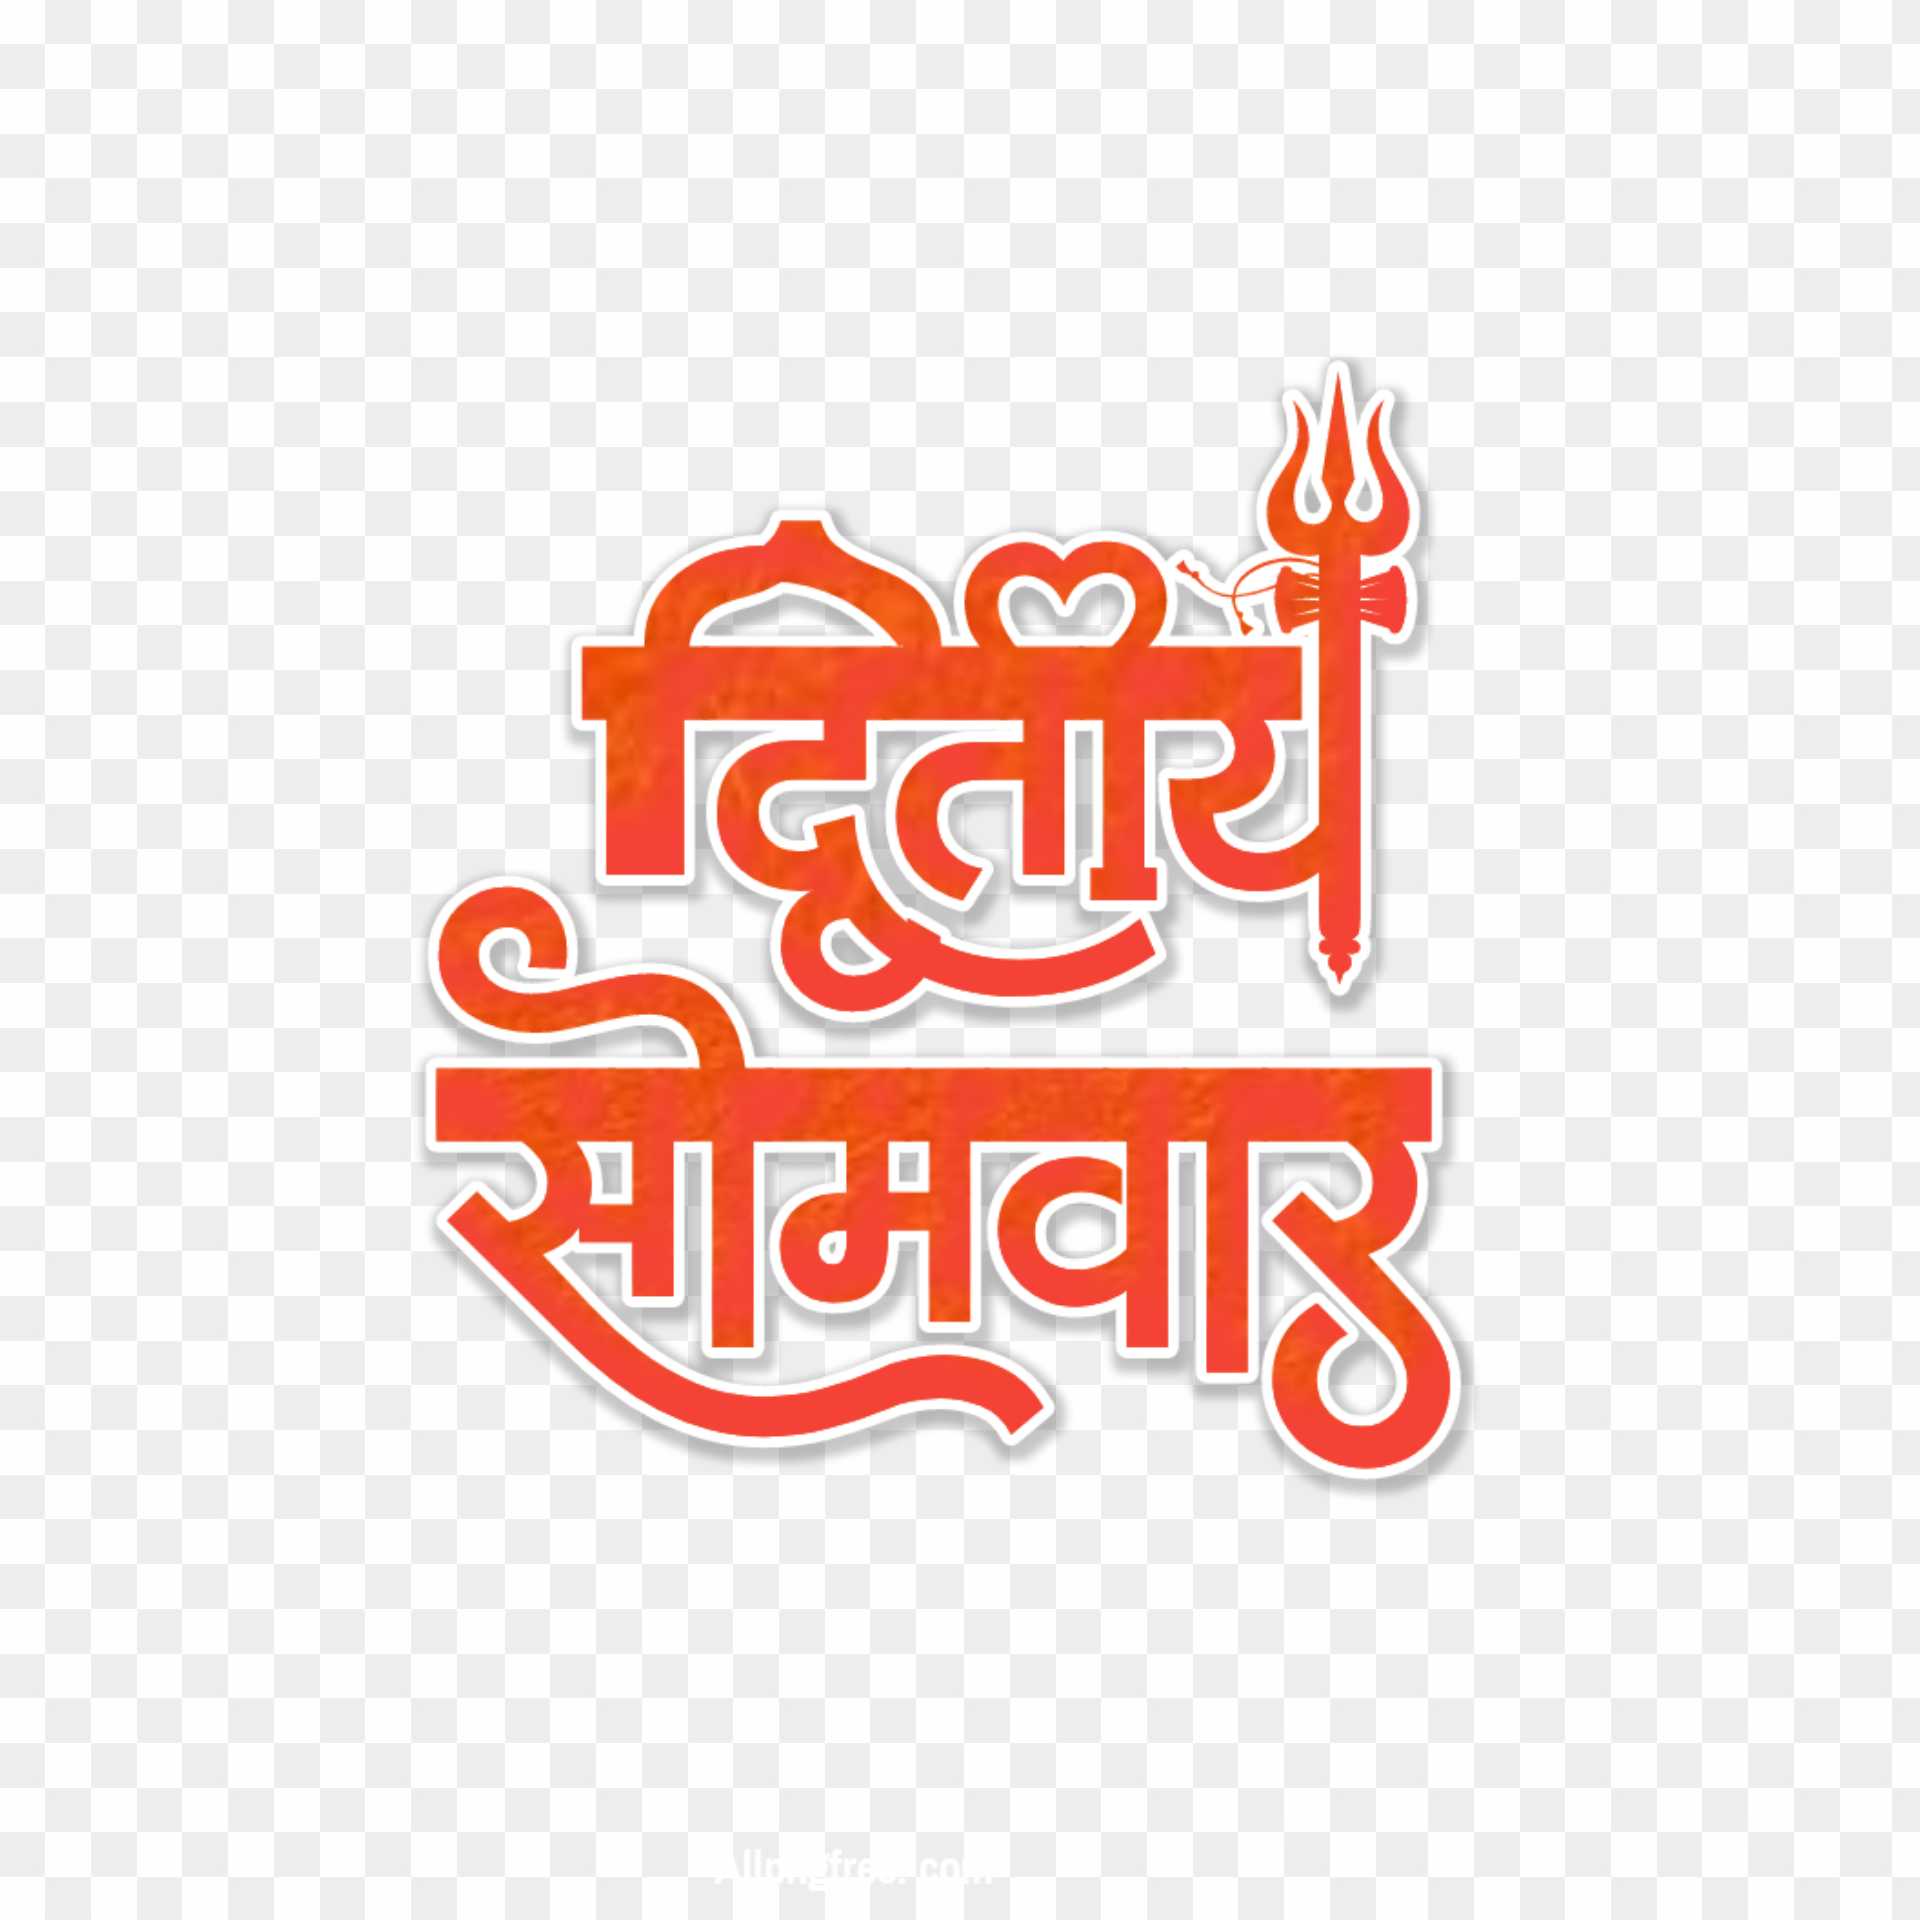 Dwitiya Somwar Hindi text PNG images download